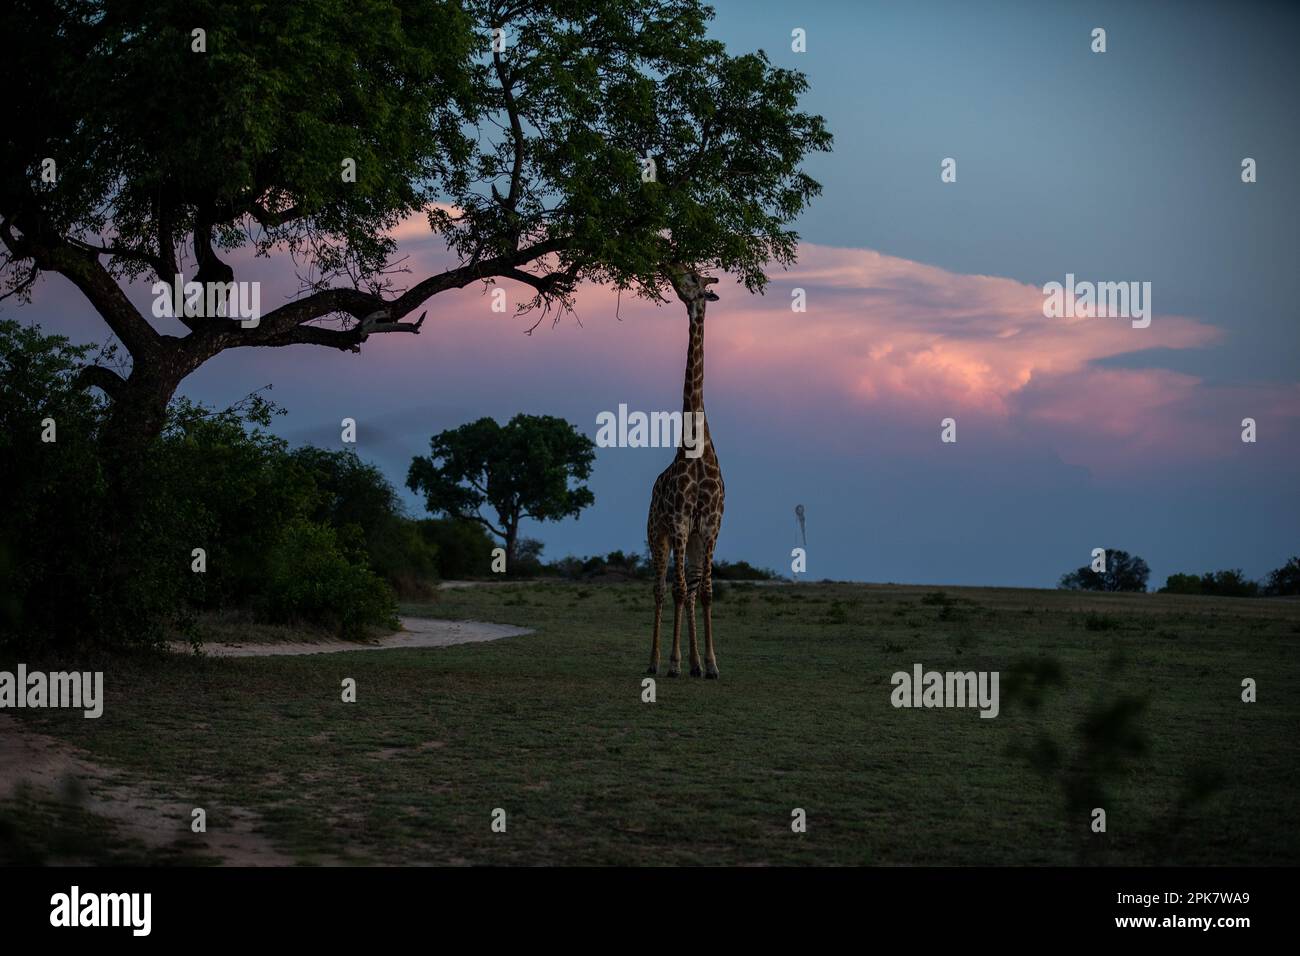 A Giraffe, Giraffa, eating leaves from a tree, sunset backdrop. Stock Photo